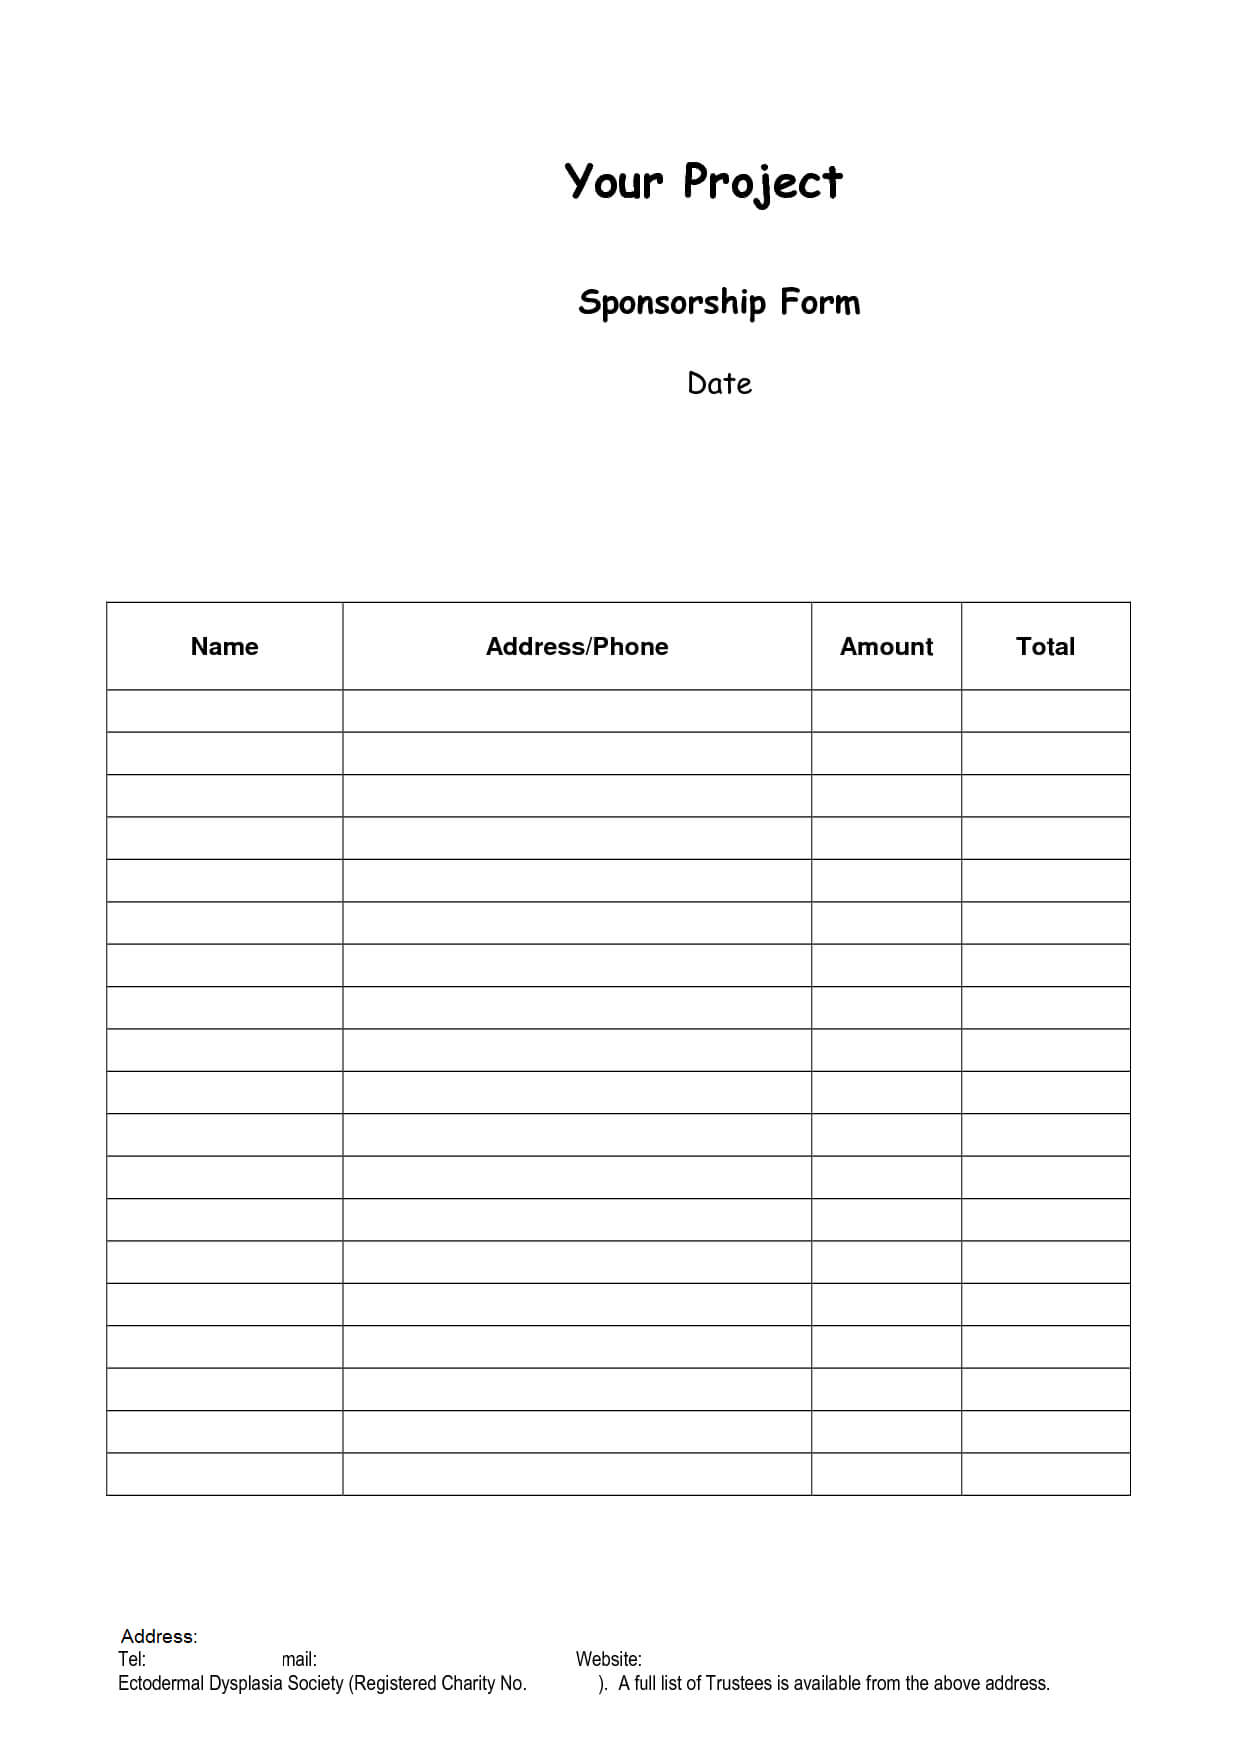 Resume Template Blank Form | Free Resume Samples & Writing Inside Blank Sponsor Form Template Free